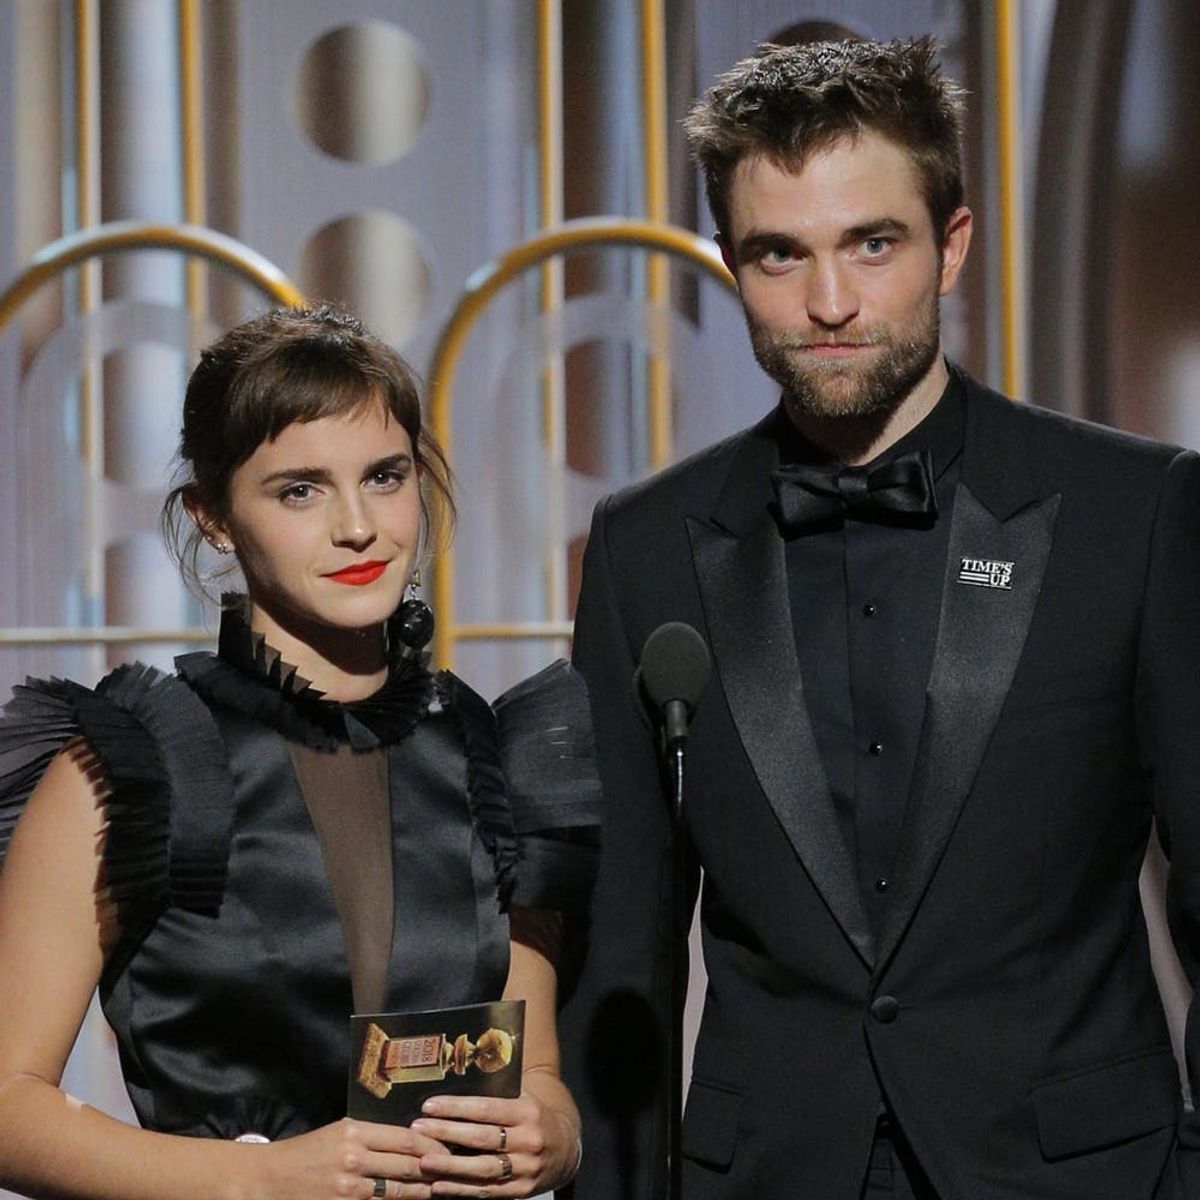 Emma Watson and Robert Pattinson Had a Mini ‘Harry Potter’ Reunion at the 2018 Golden Globes